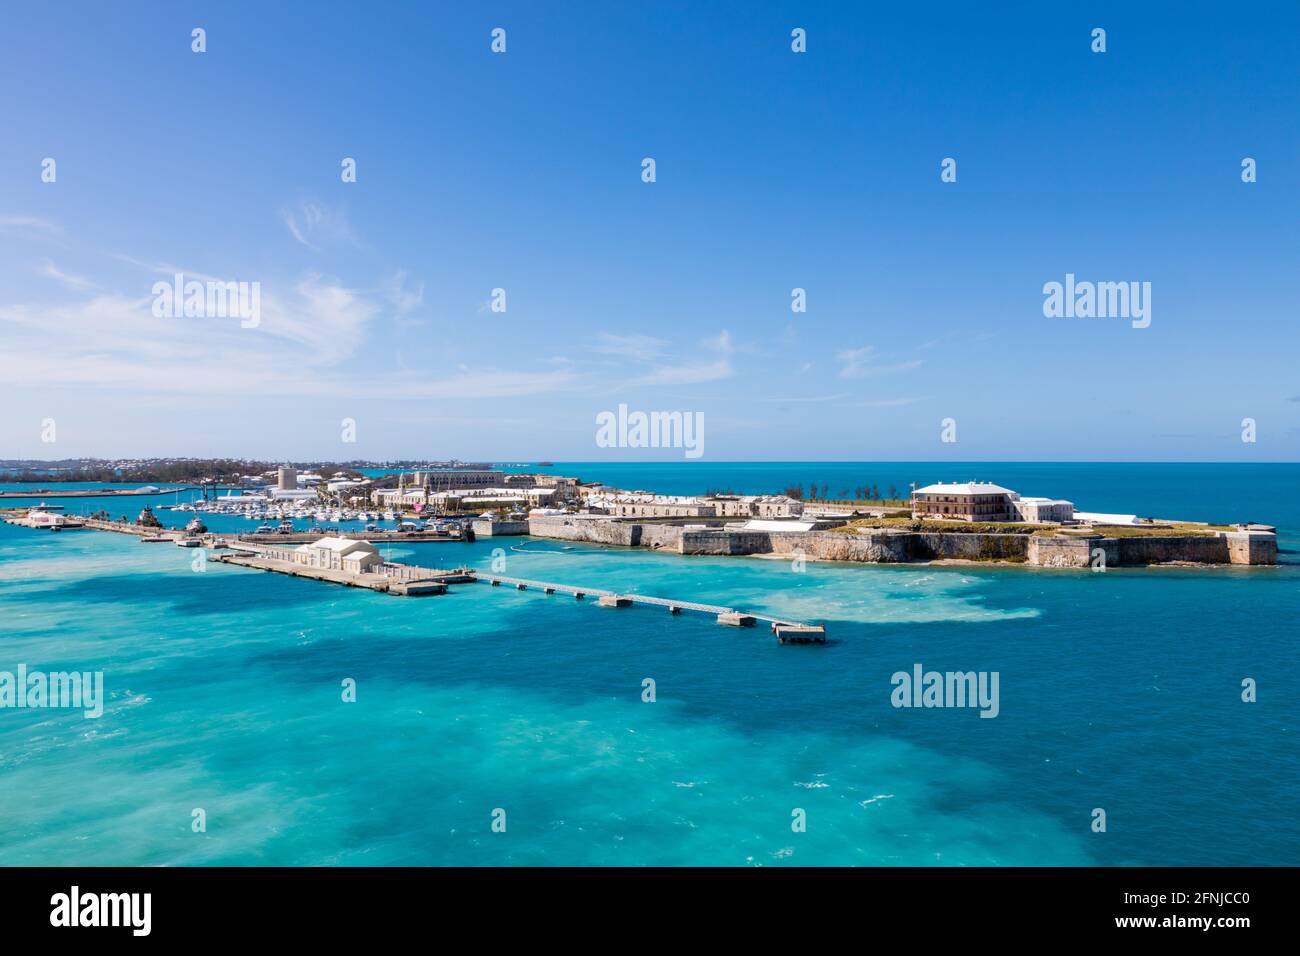 Kings wharf bermuda fotografías e imágenes de alta resolución - Alamy